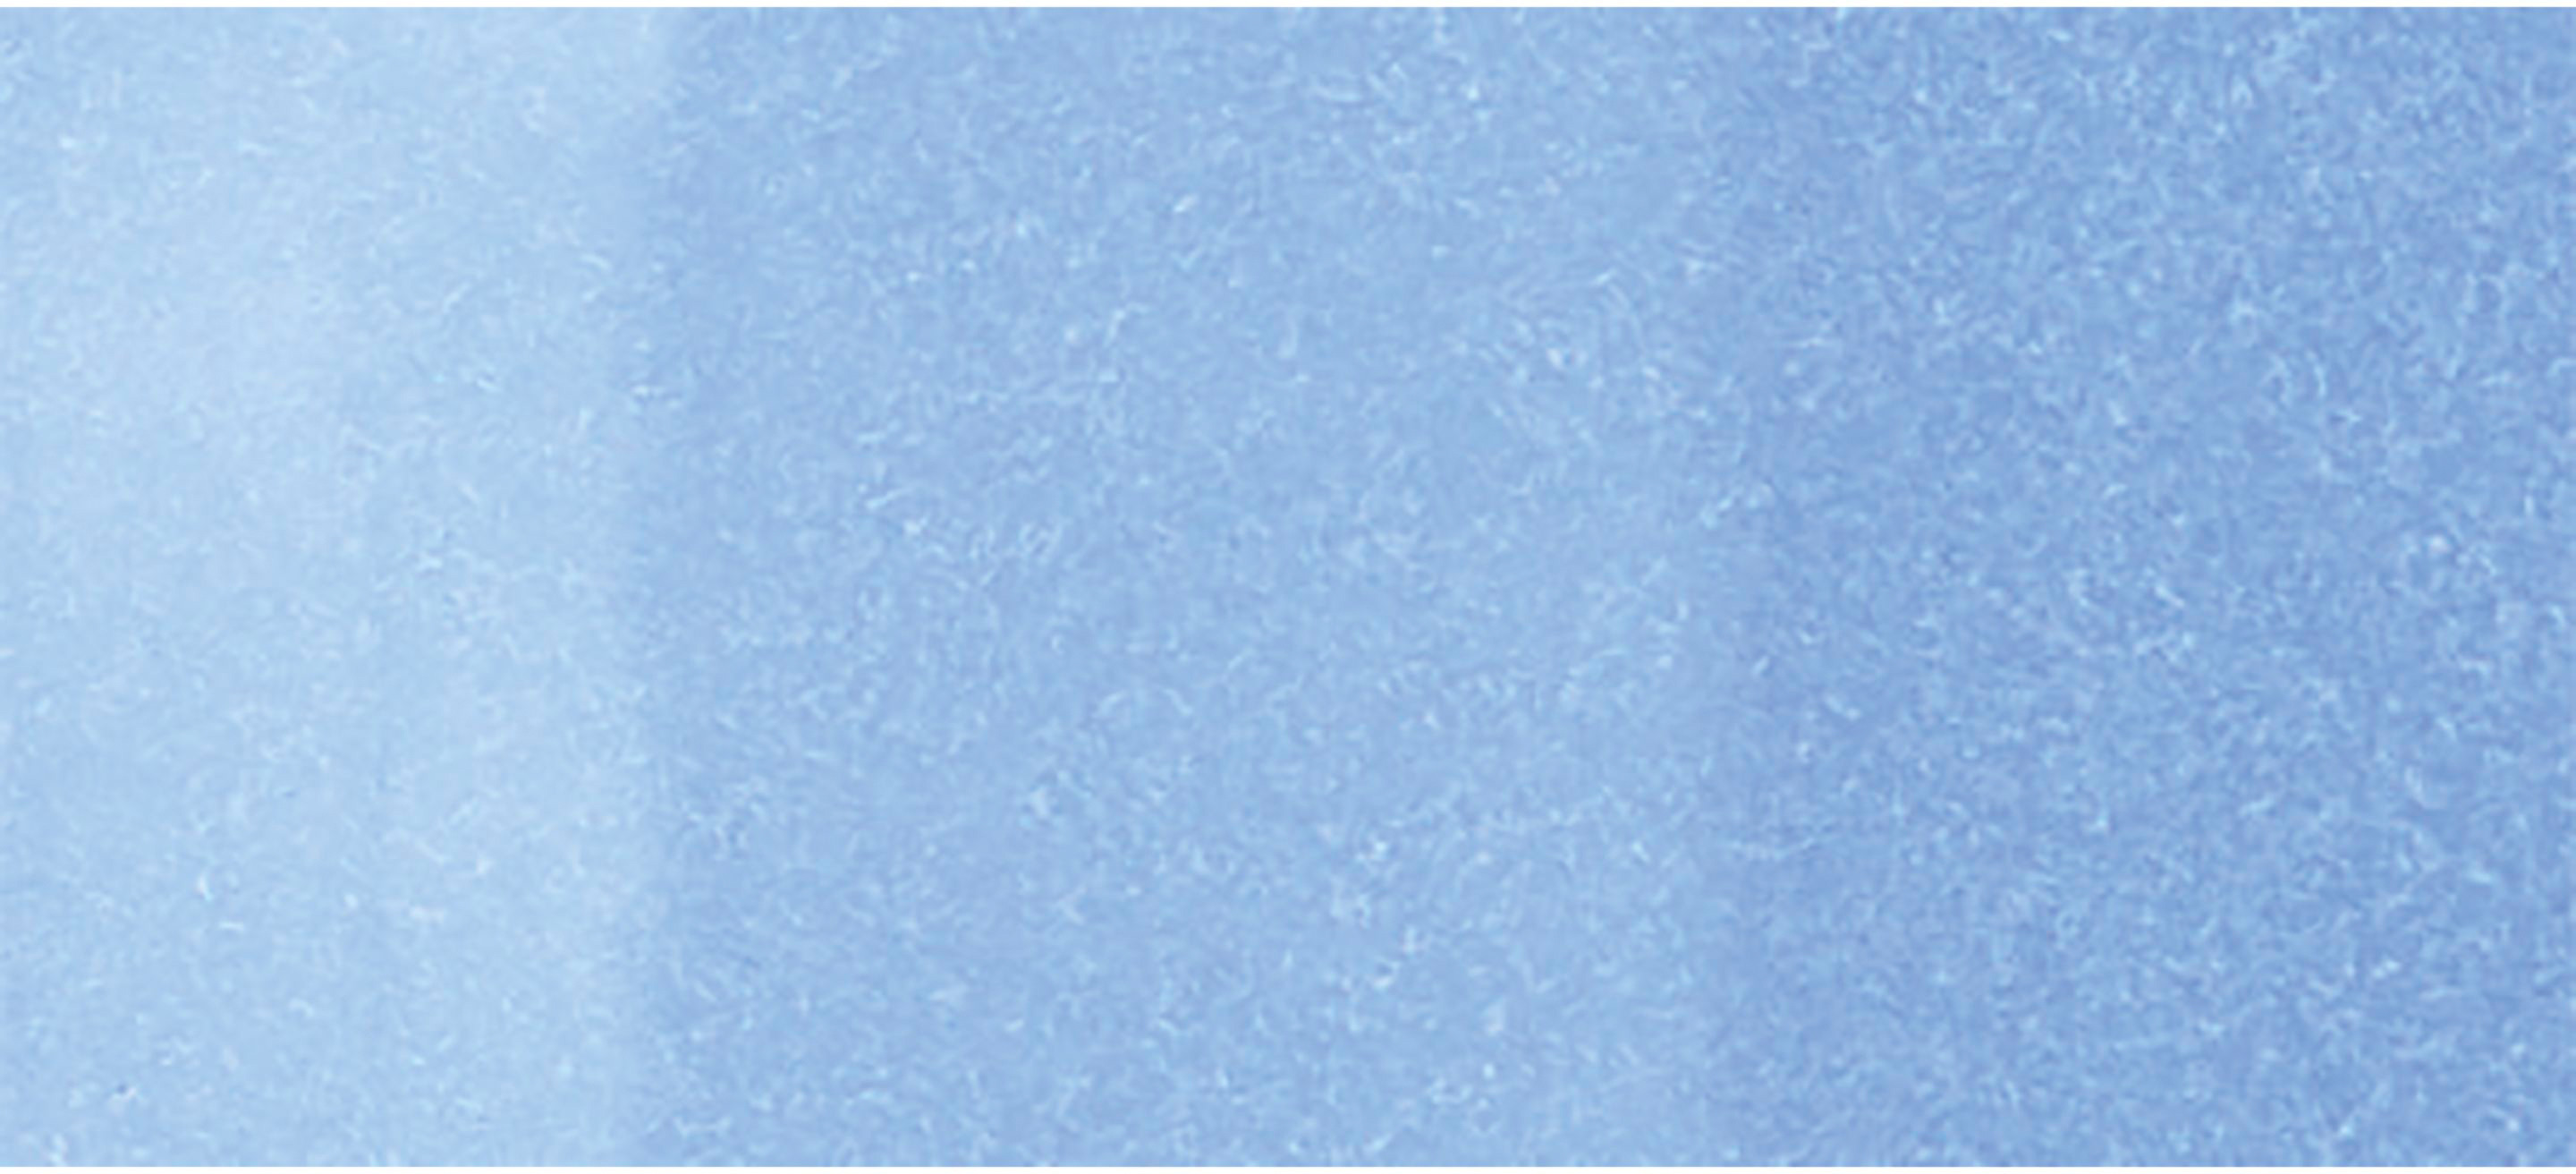 COPIC Marker Sketch 2107551 B32 - Pale Blue